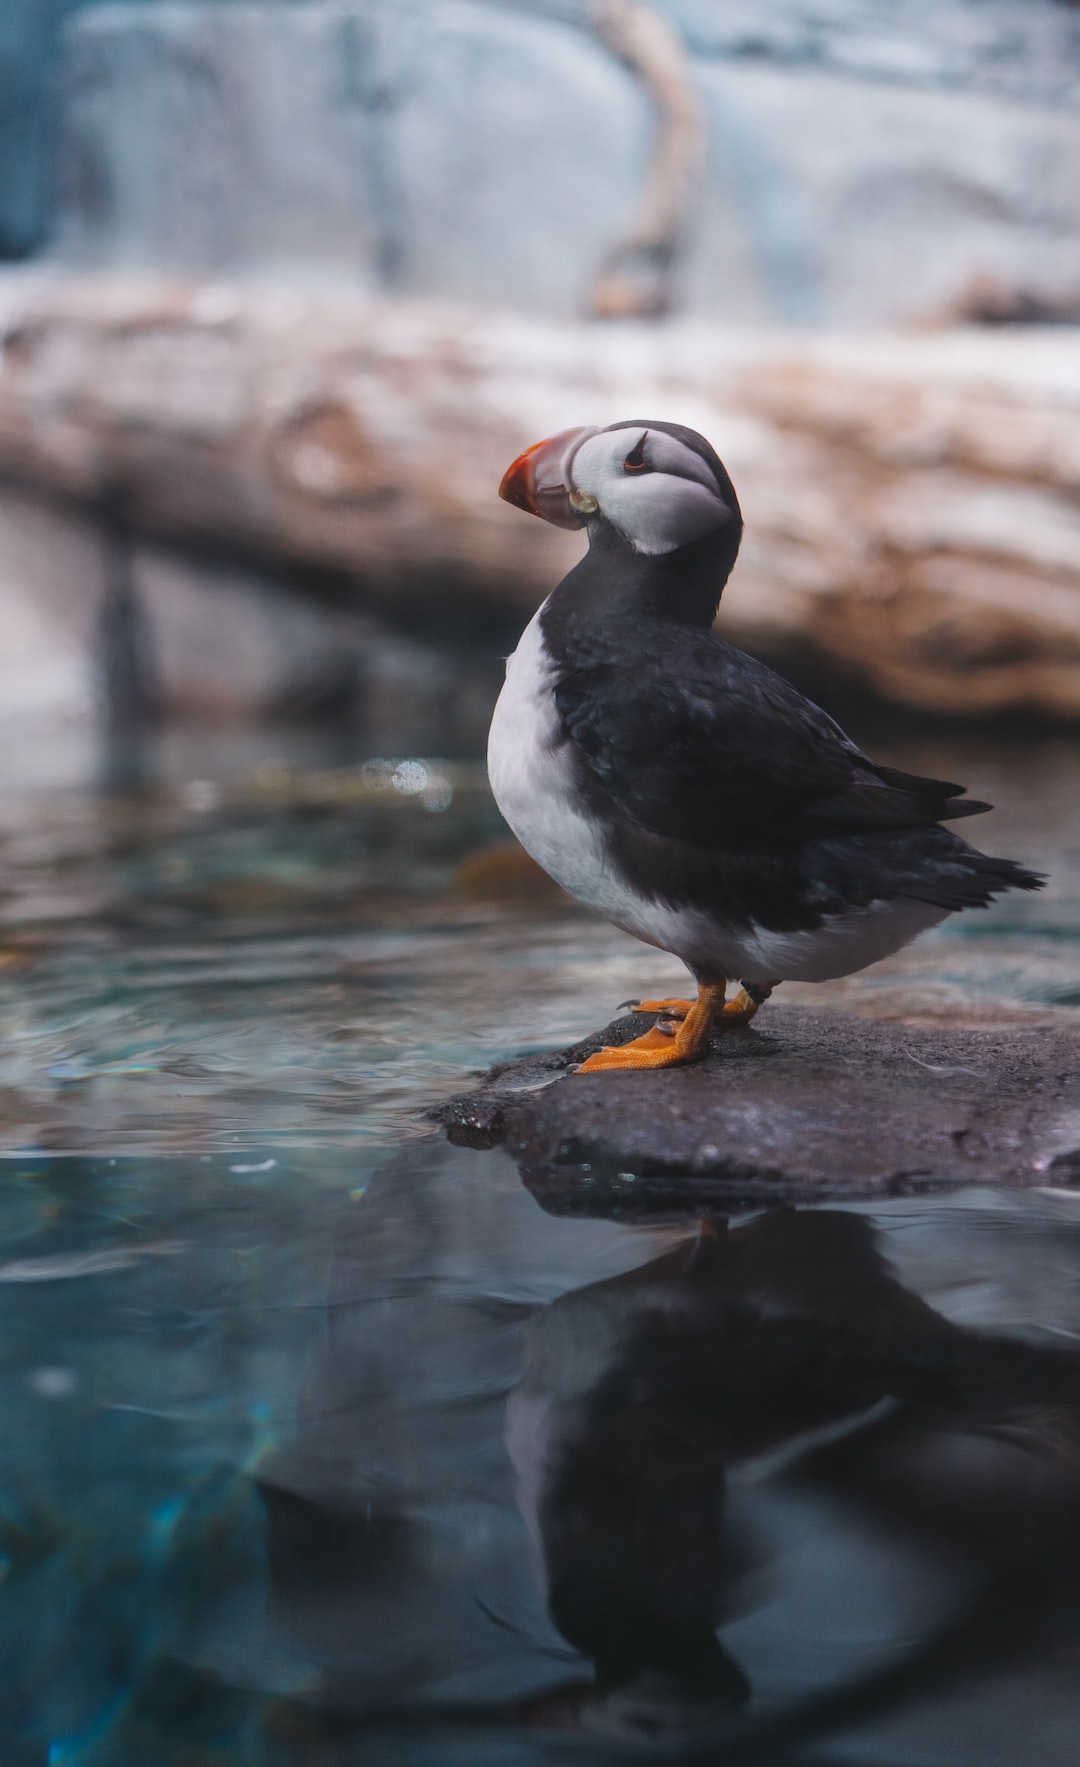 21 wichtige Fragen zu Do Aquarium Backgrounds Go Inside Or Outside?